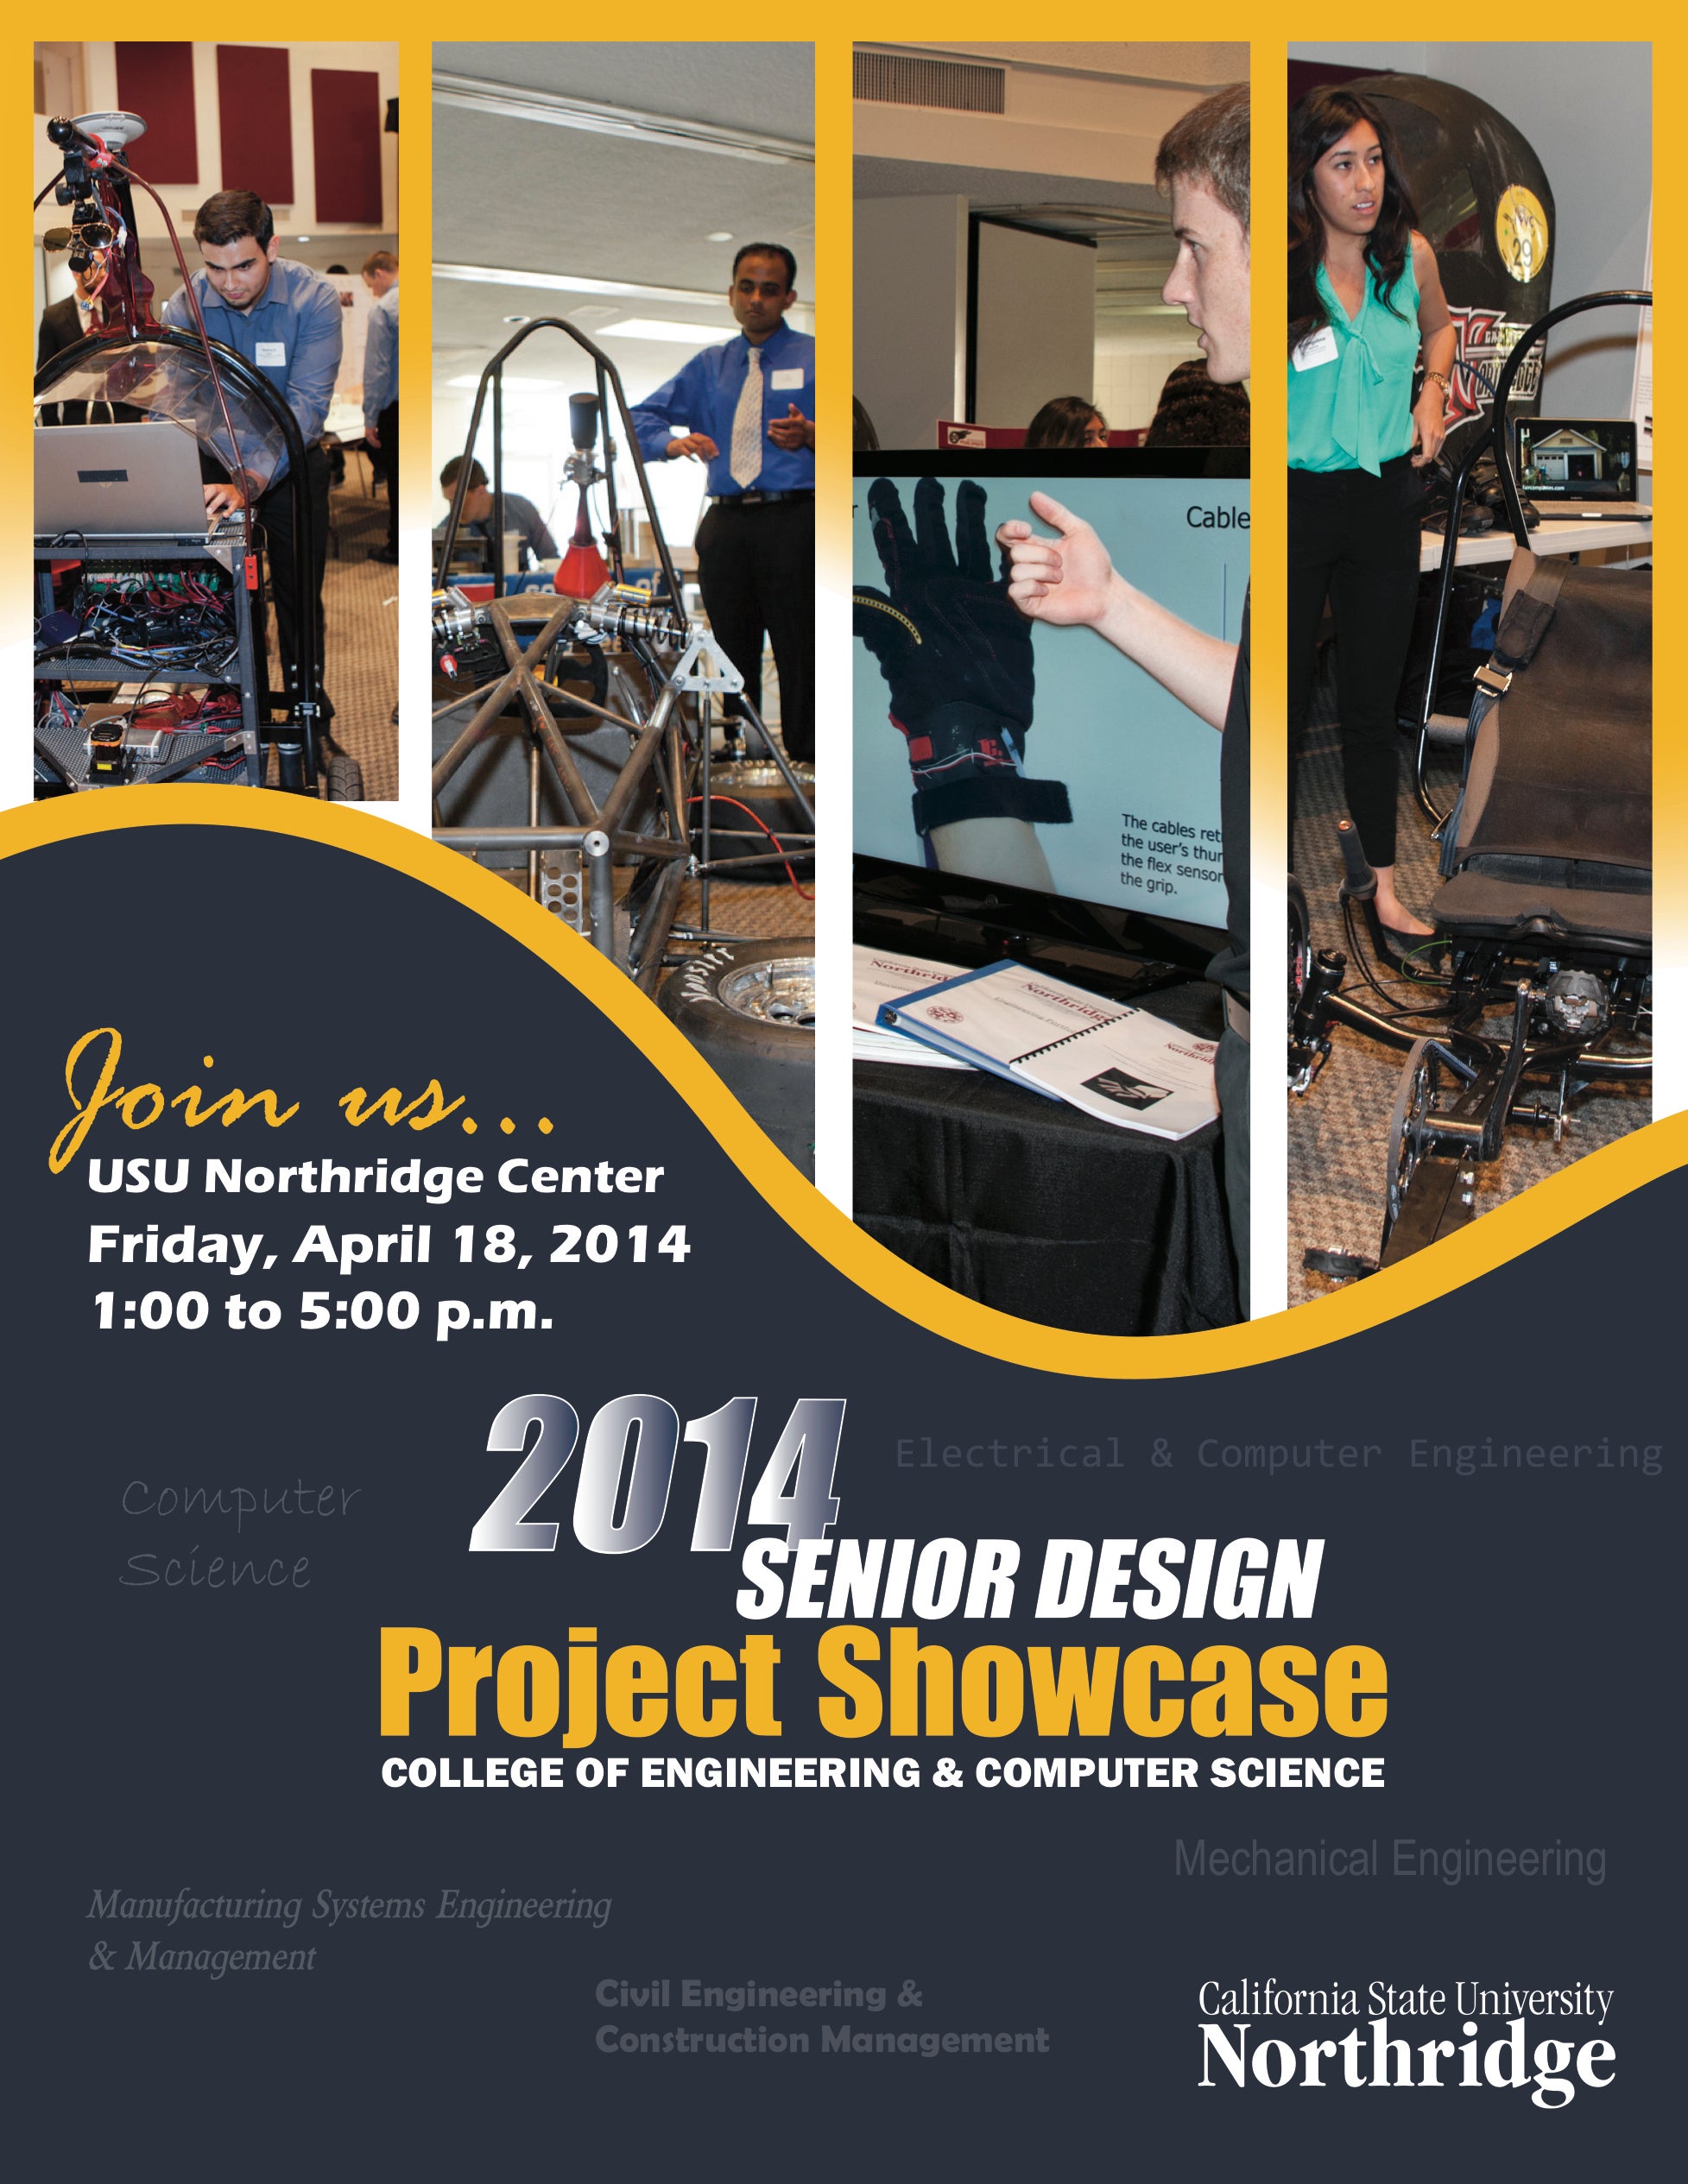 Senior Design Project Showcase